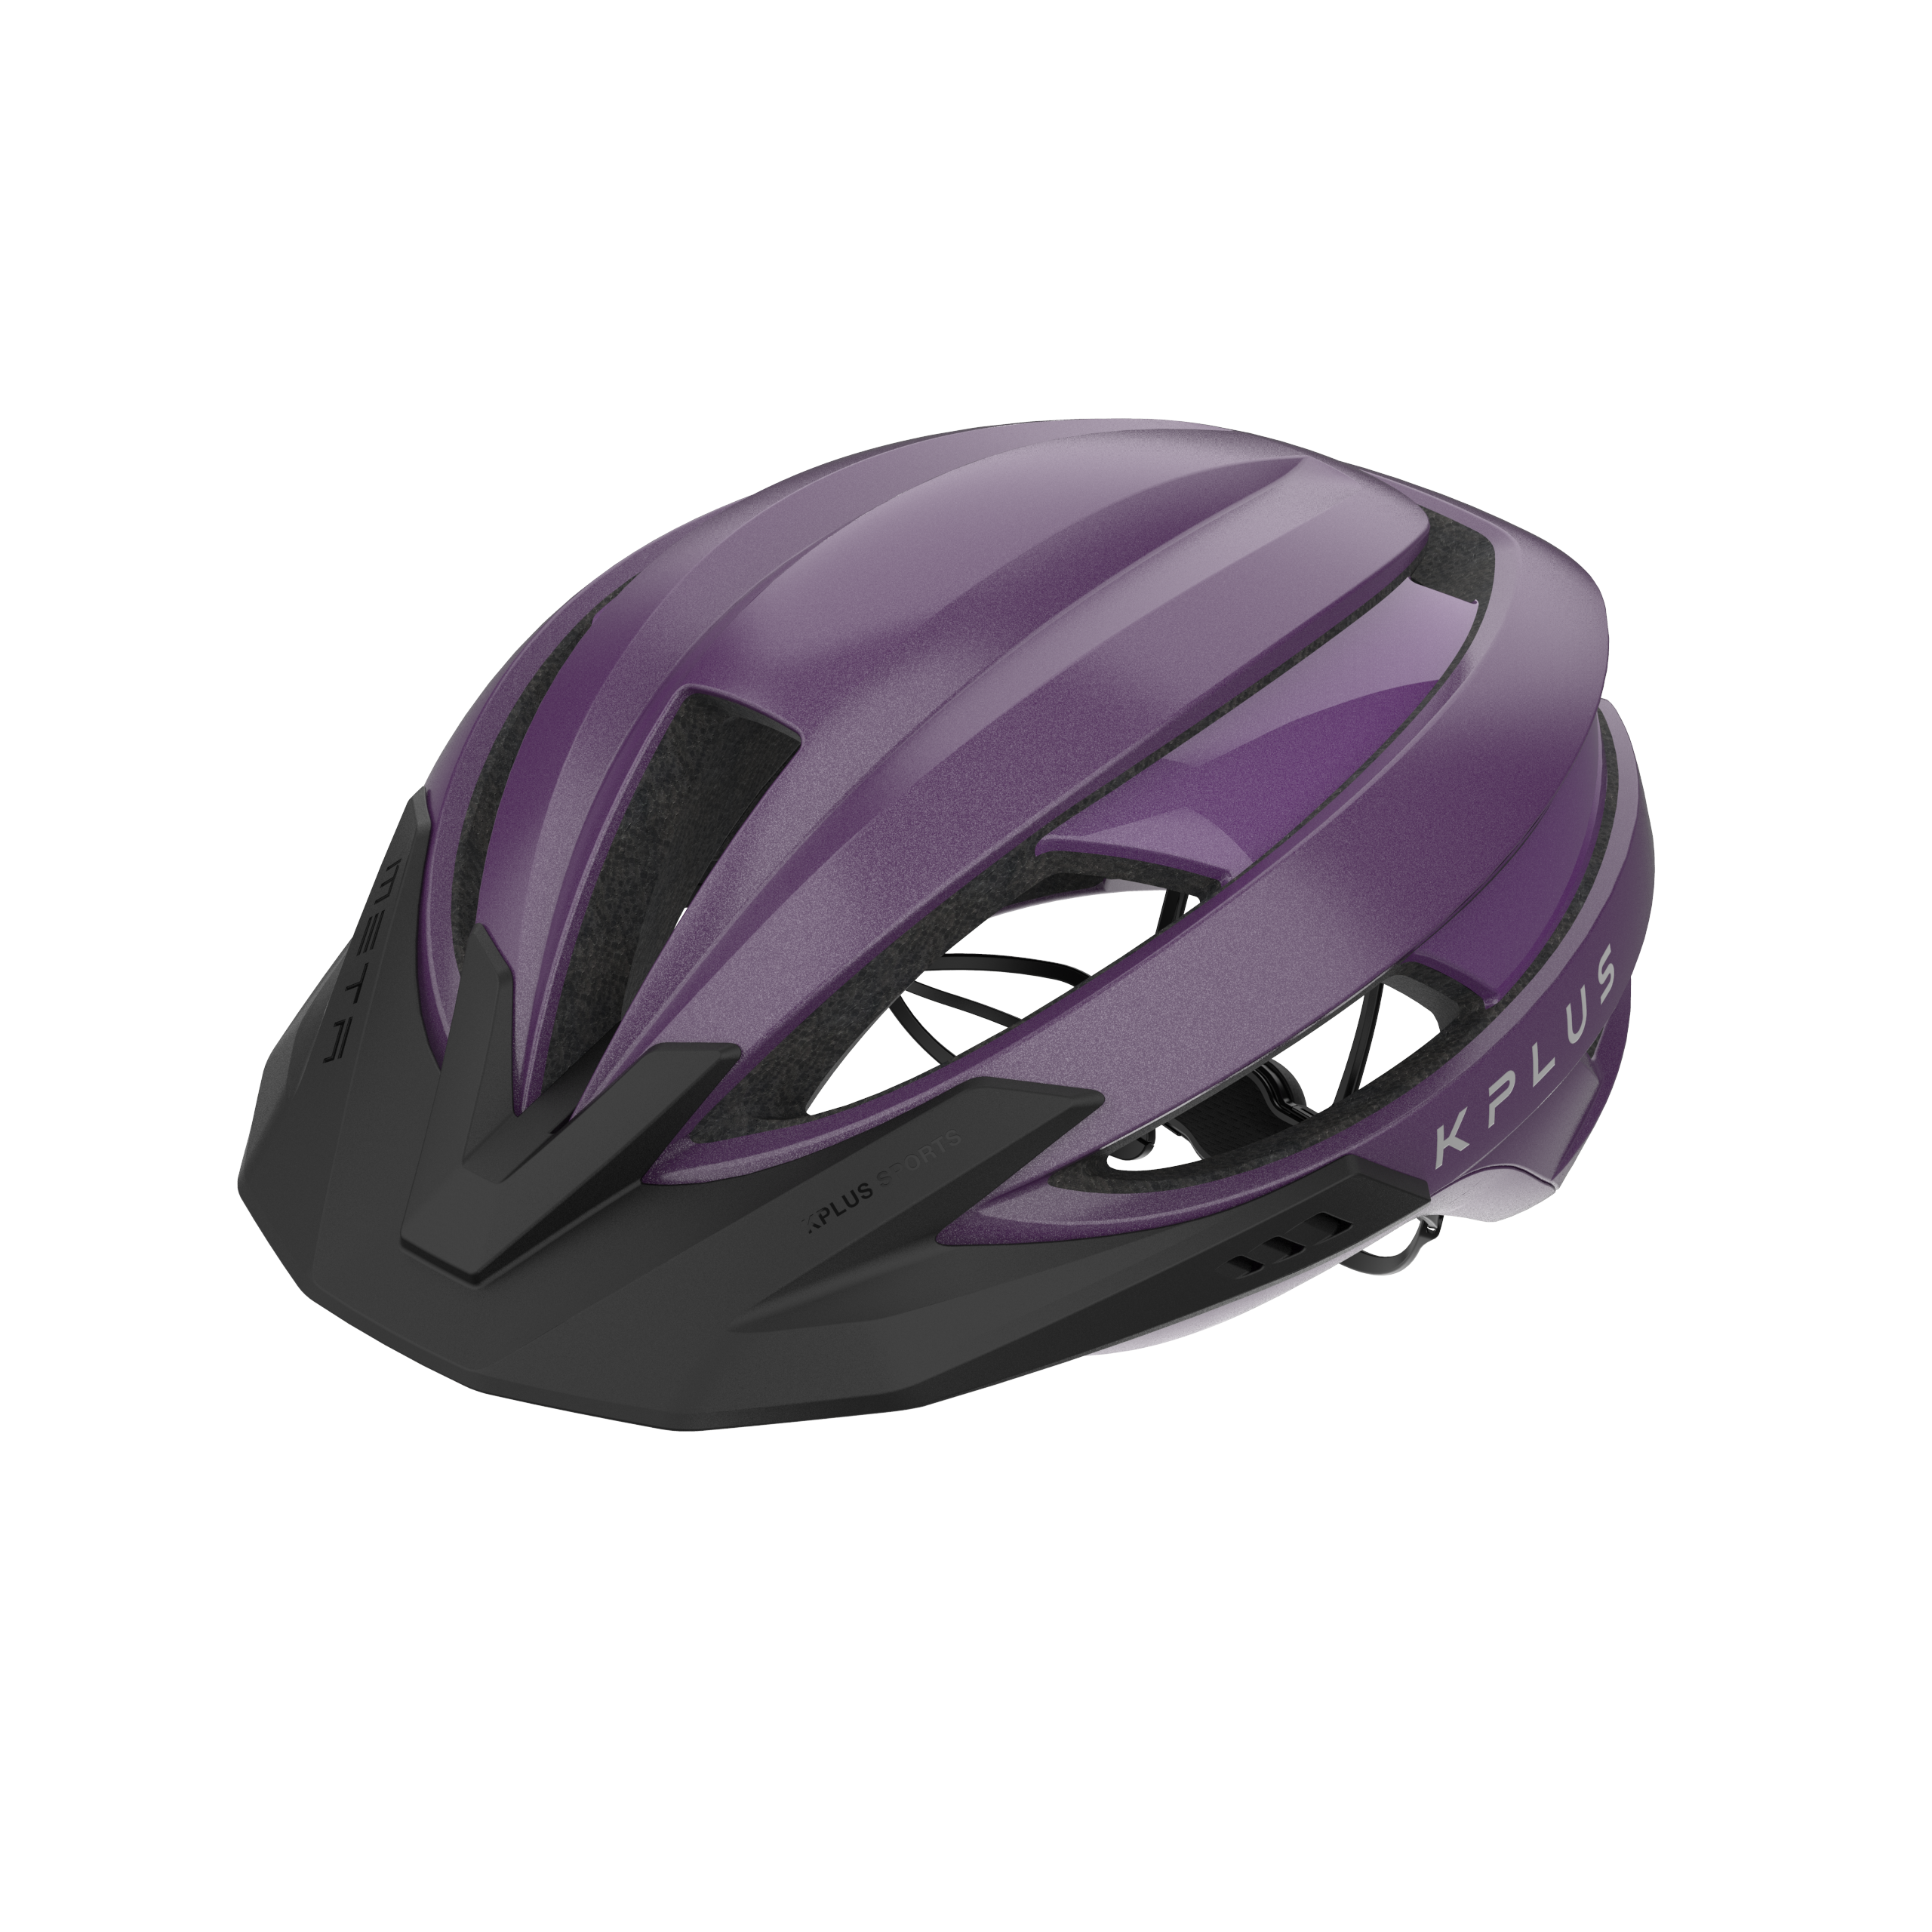 Kplus S016 Meta 公路單車頭盔 / Kplus S016 Meta Road Helmet